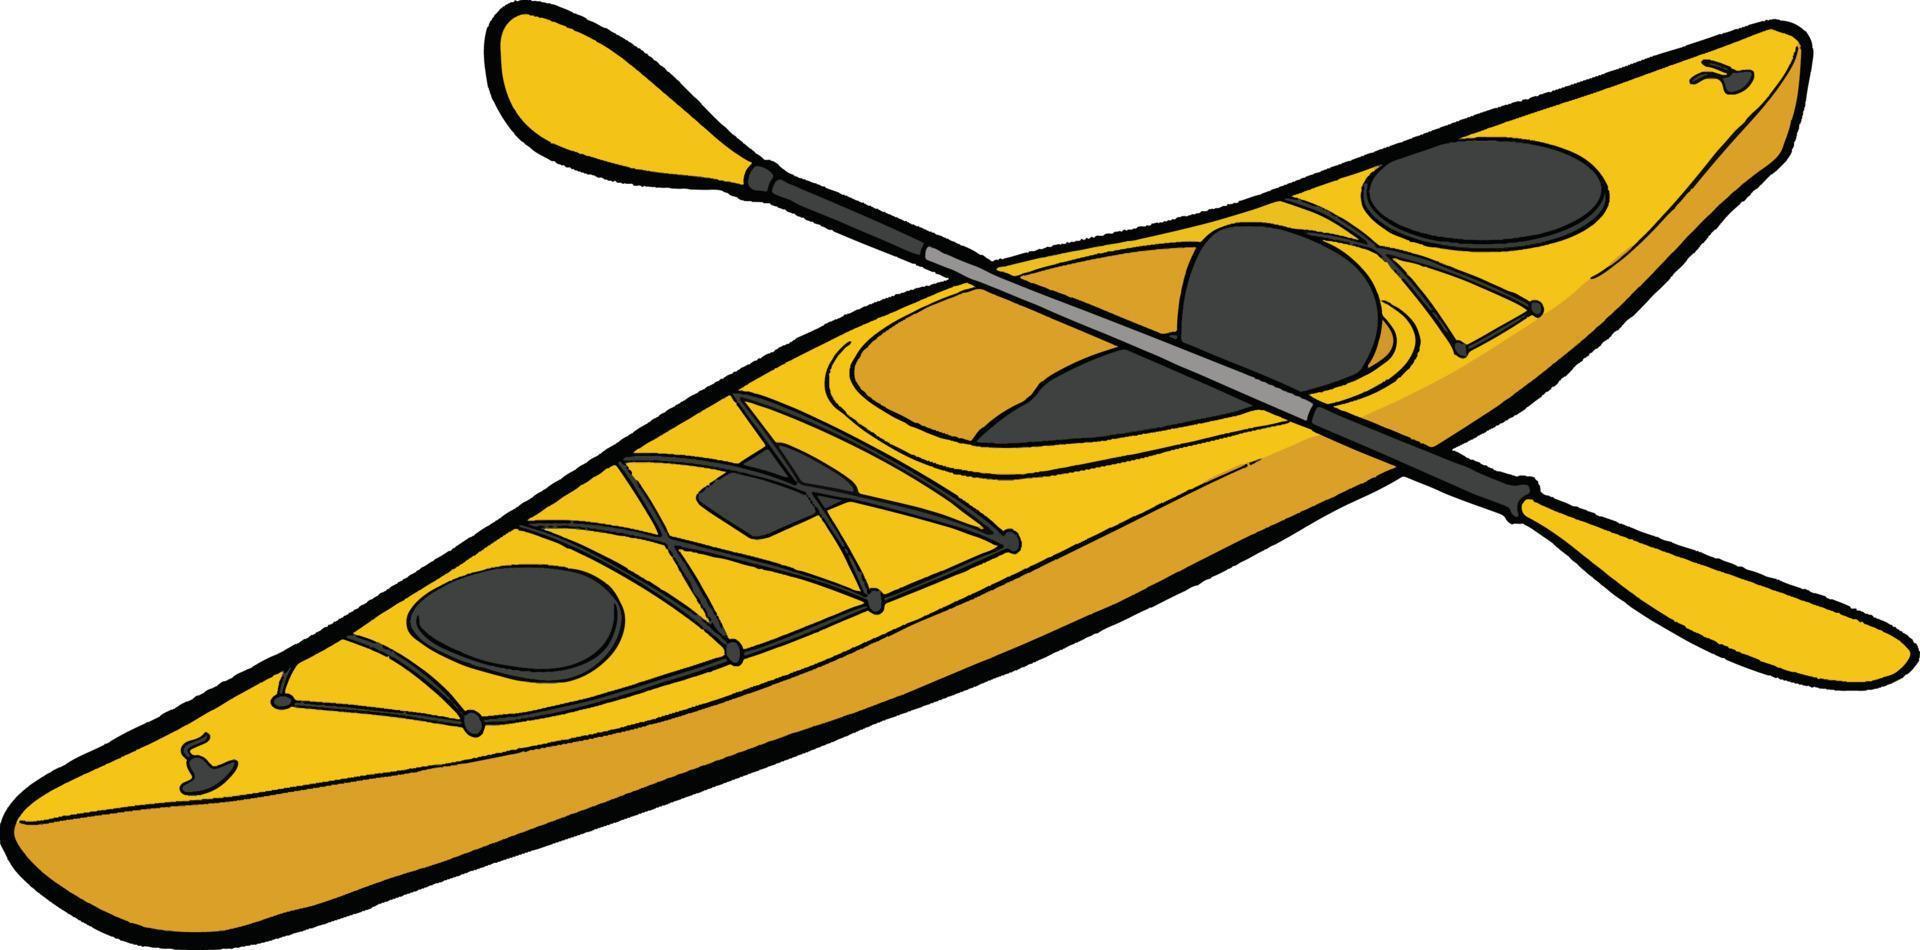 a yellow kayak boat sport vector